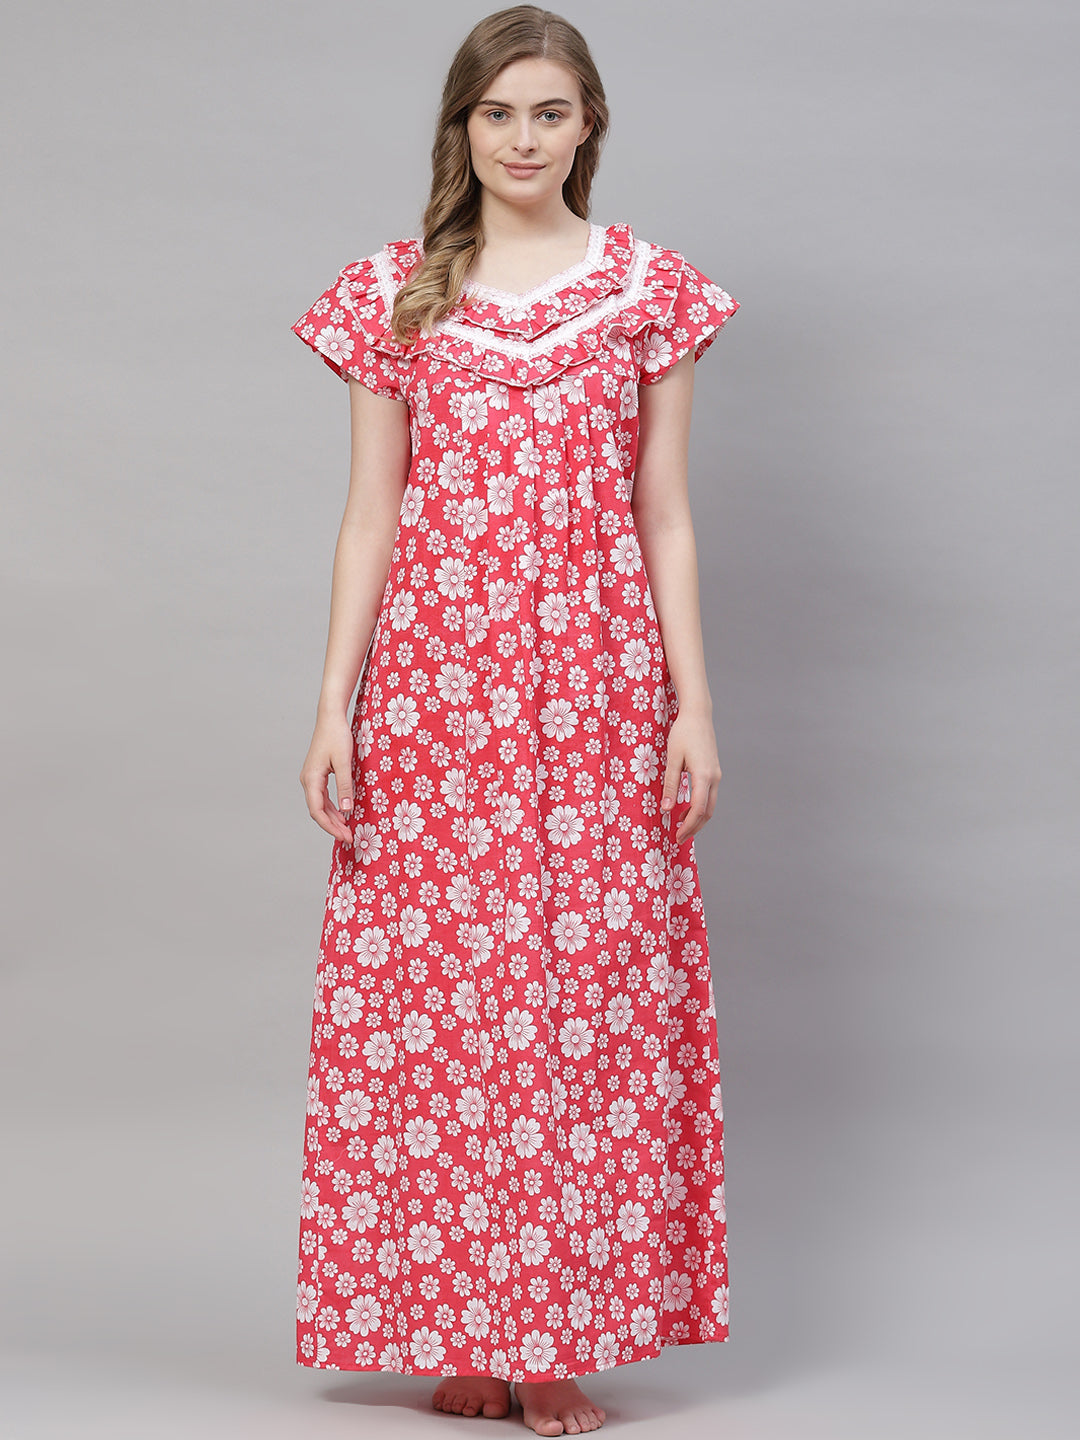 Women's 100% Cotton Short Sleeve Nightie Gown Night Sleepwear Indian Maxi  Dress | eBay